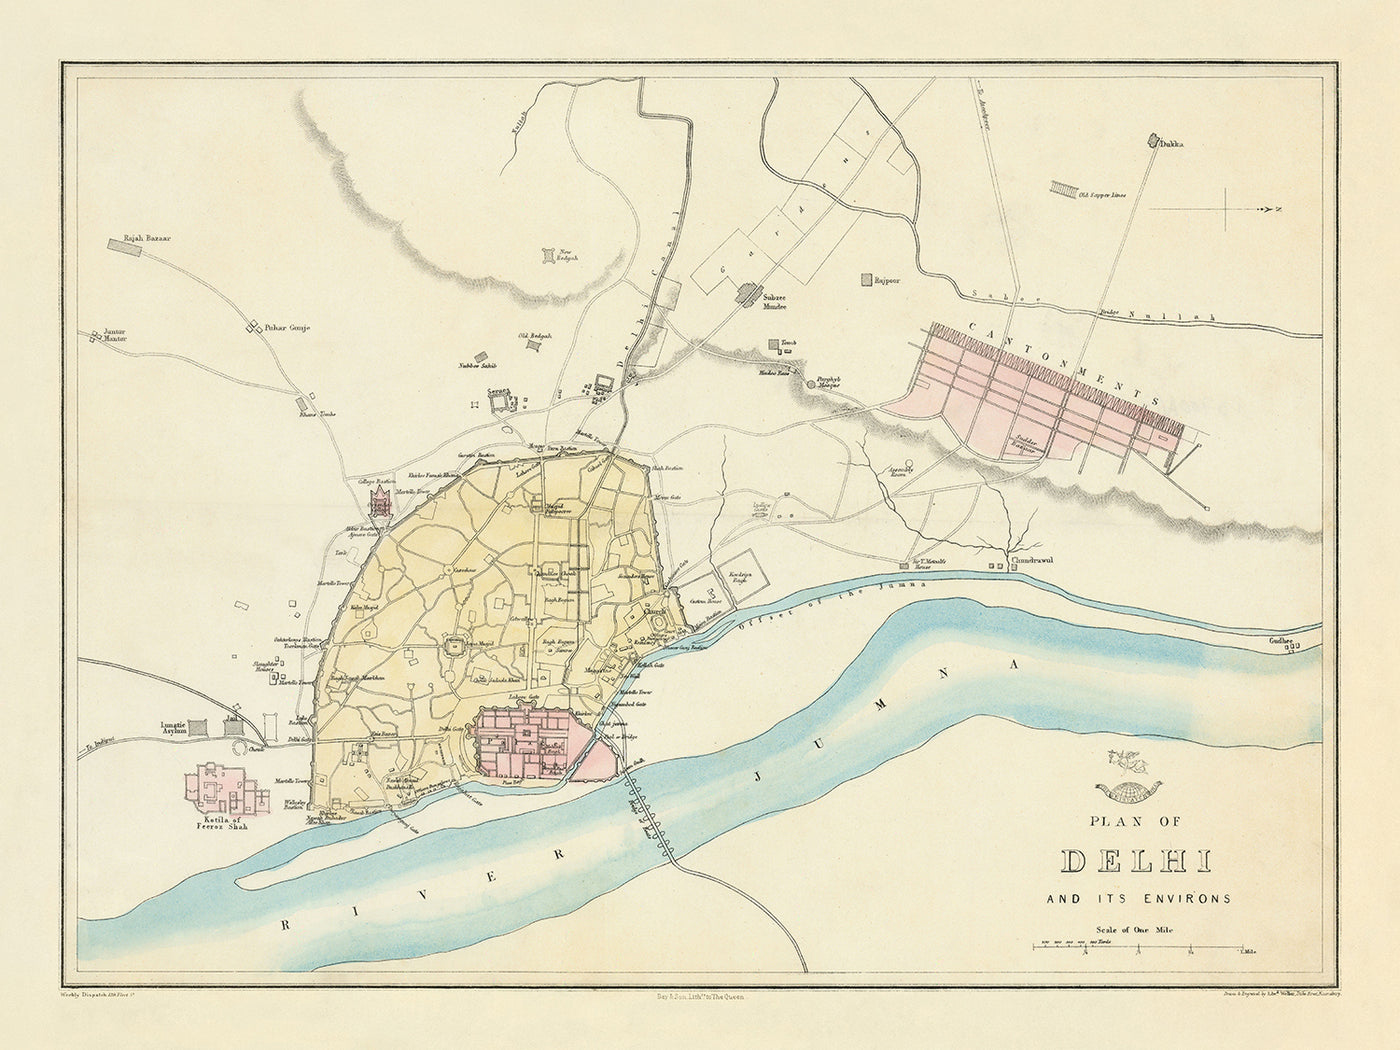 Old Map of Delhi by Weller, 1860: Jama Musjid, The Palace, Bridge of Boats, Cantonments, River Jumna